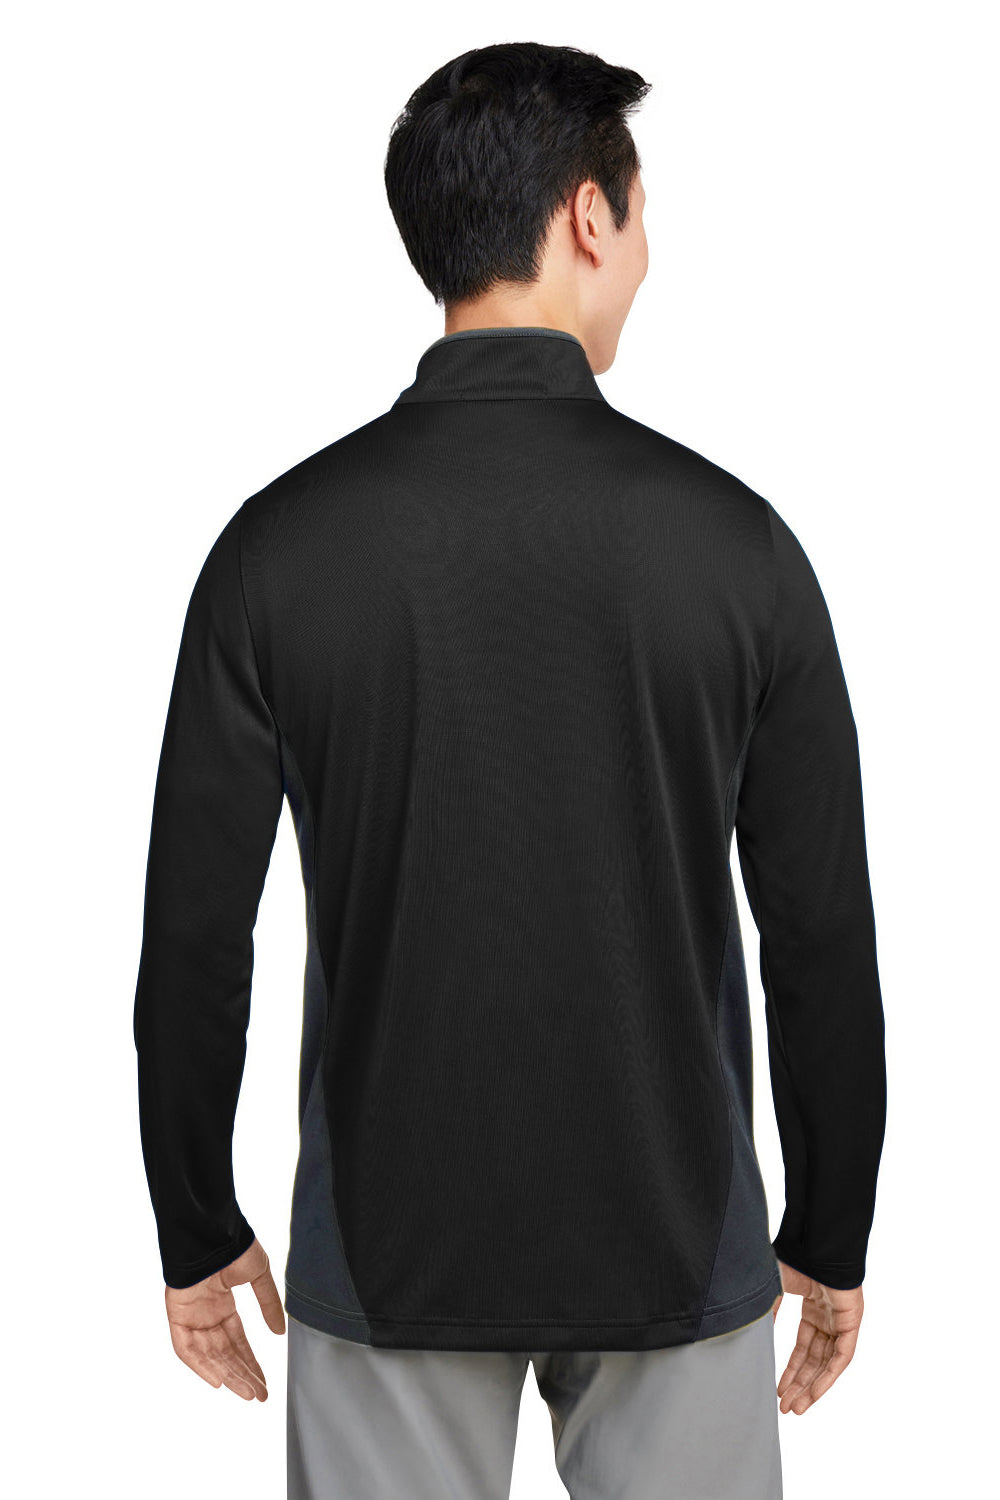 Harriton M786 Mens Flash Performance Moisture Wicking Colorblock 1/4 Zip Sweatshirt Black/Dark Charcoal Grey Back